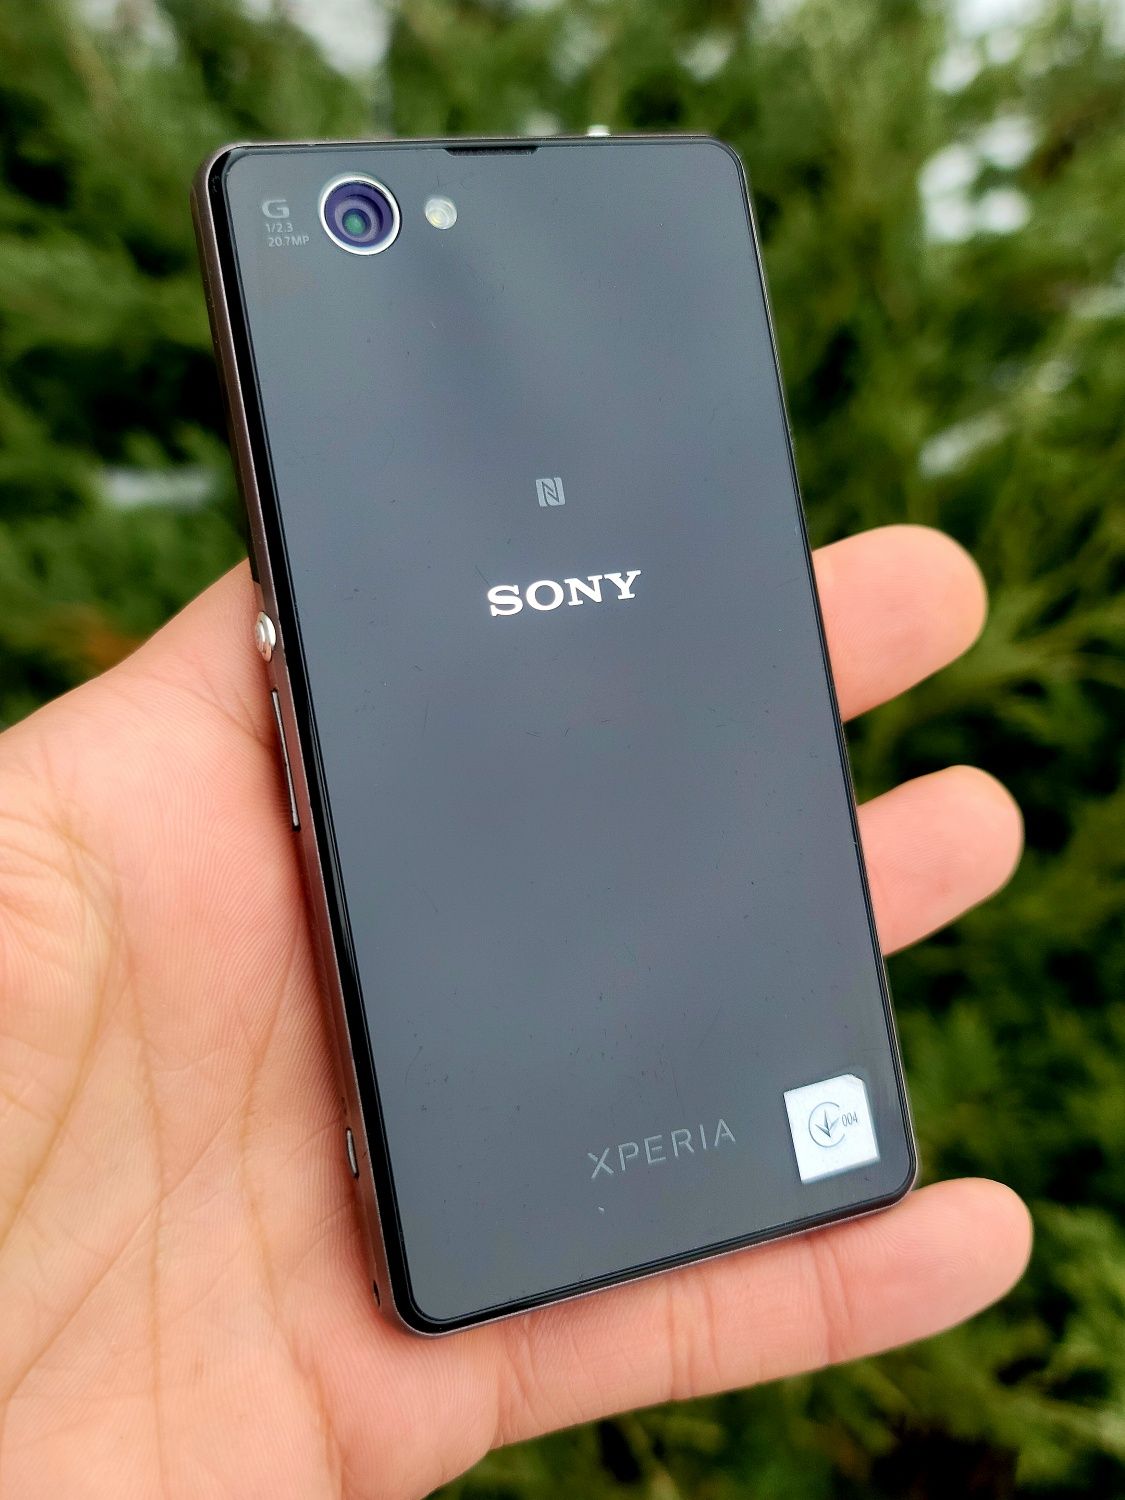 Sony Xperia Z1 Compact Black 4G NFC